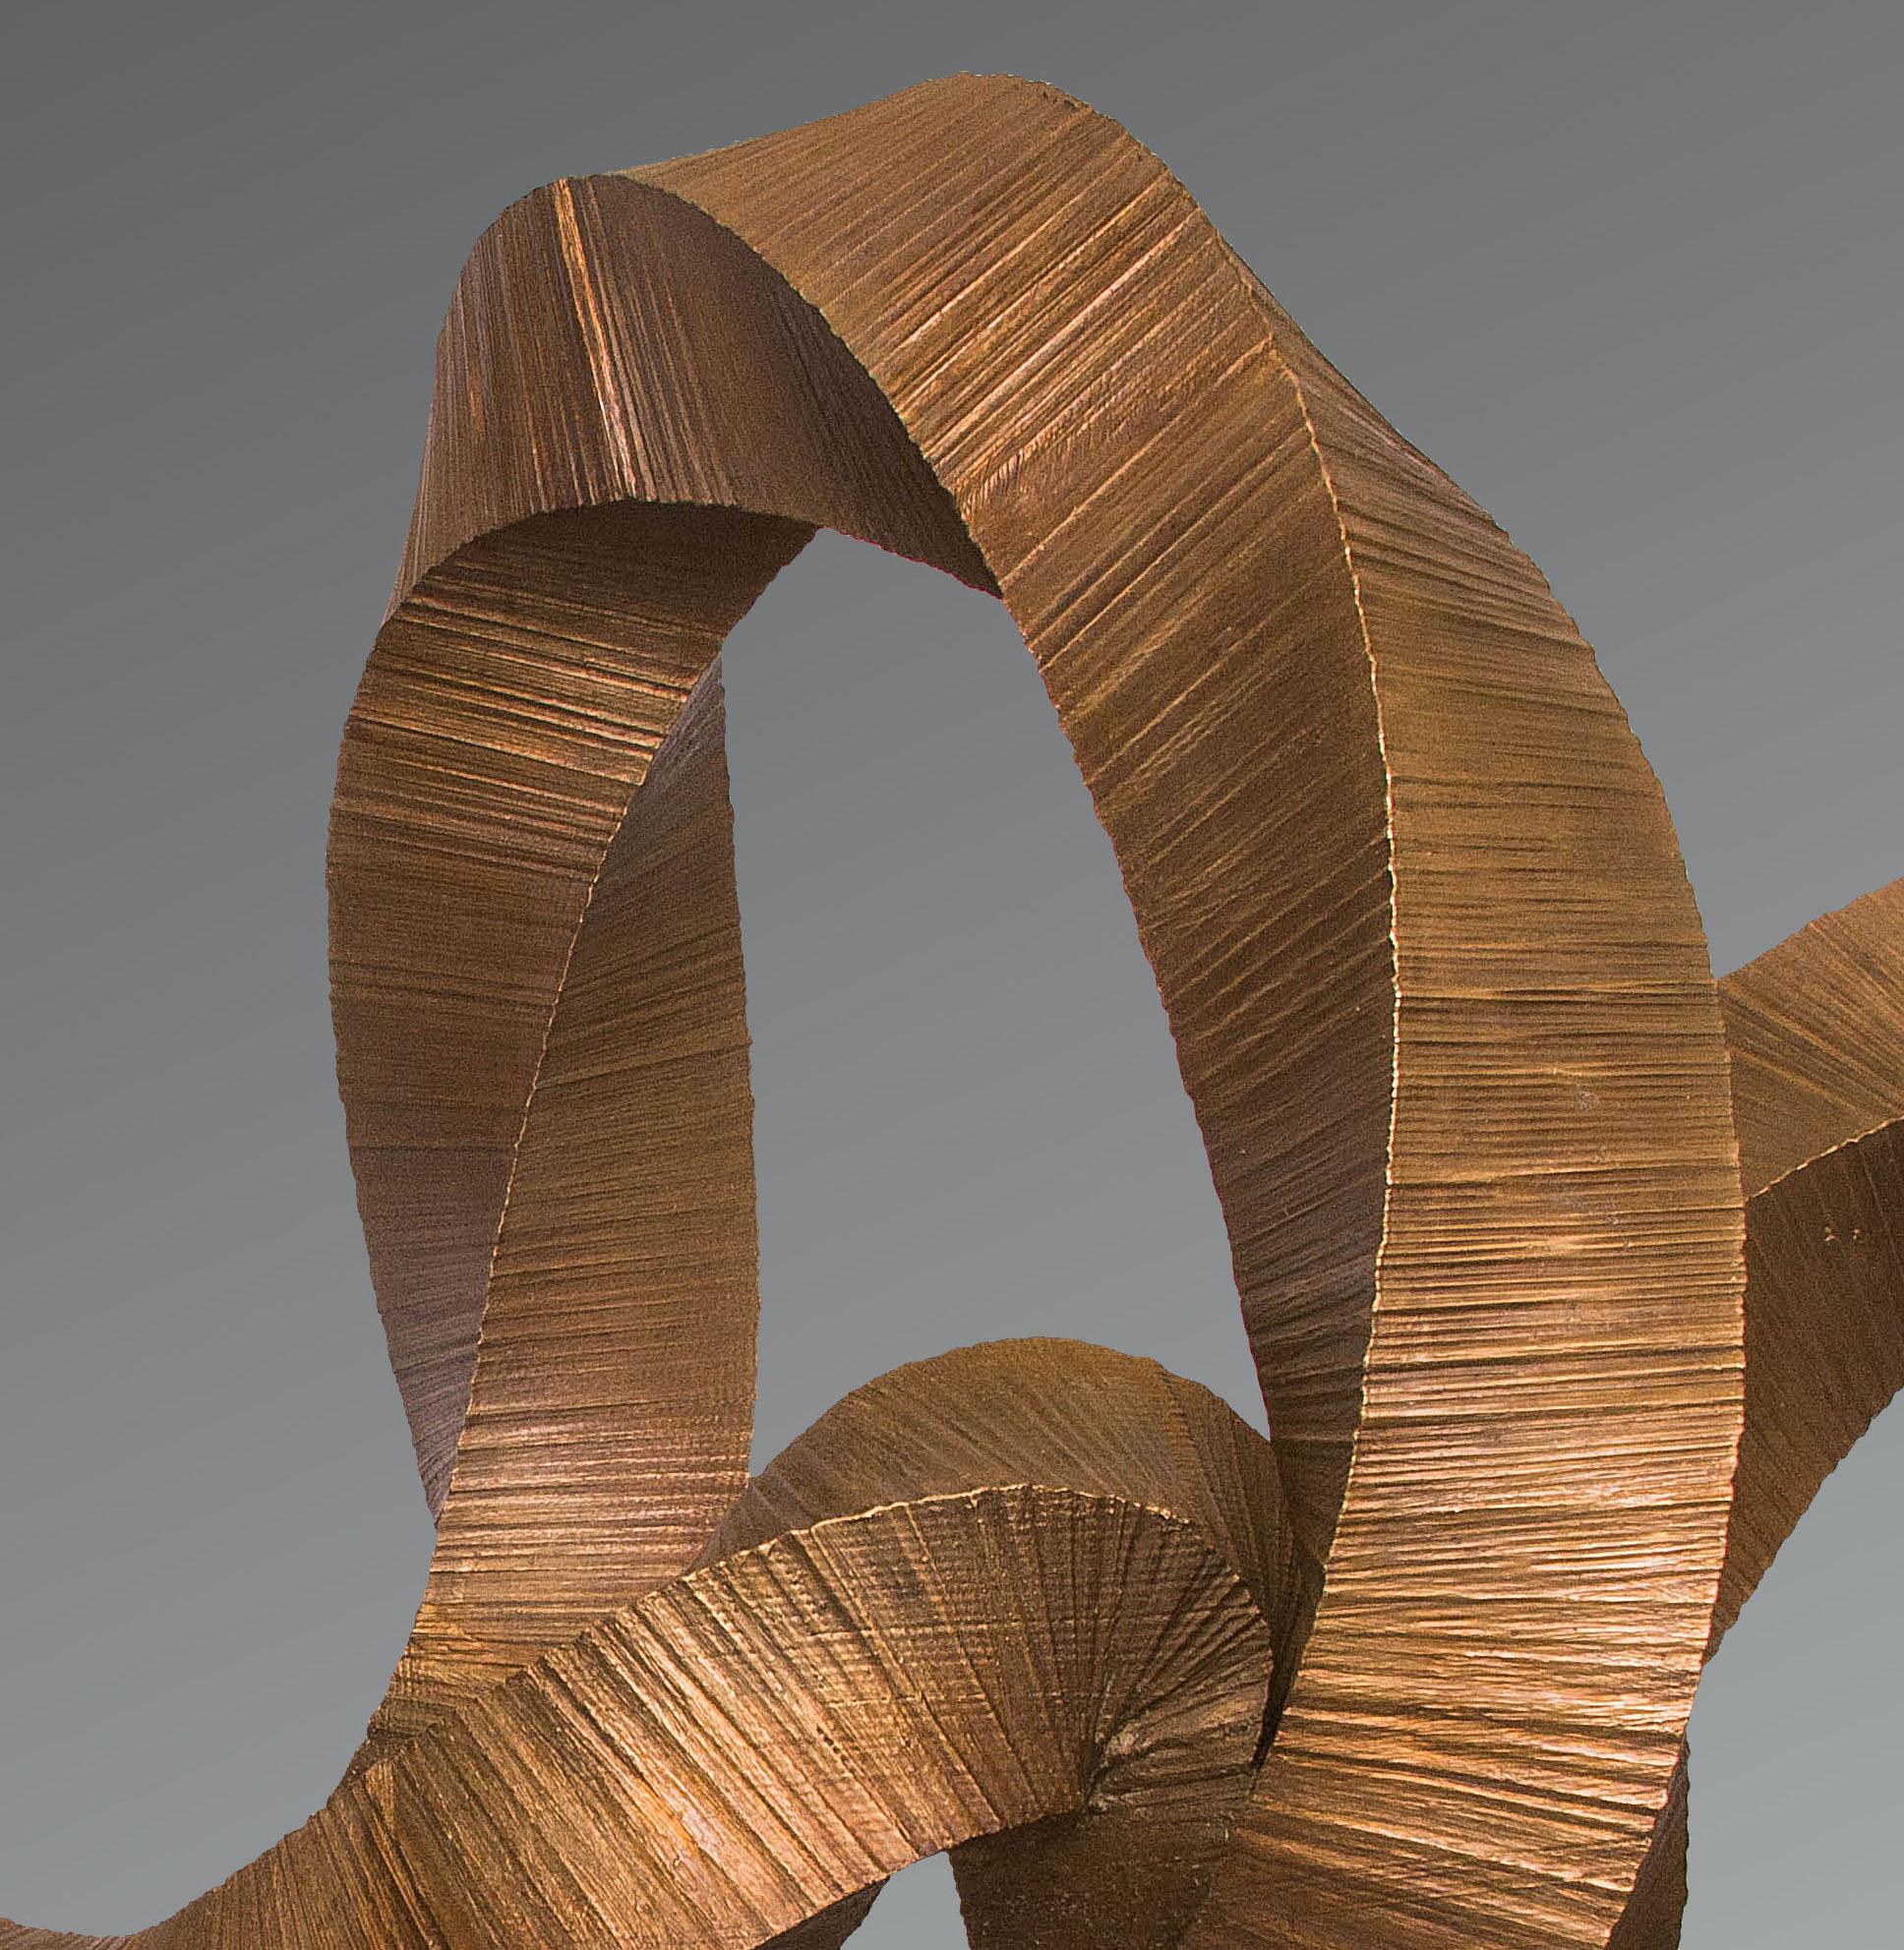 Toqueri V B - Sculpture by Bruce Beasley